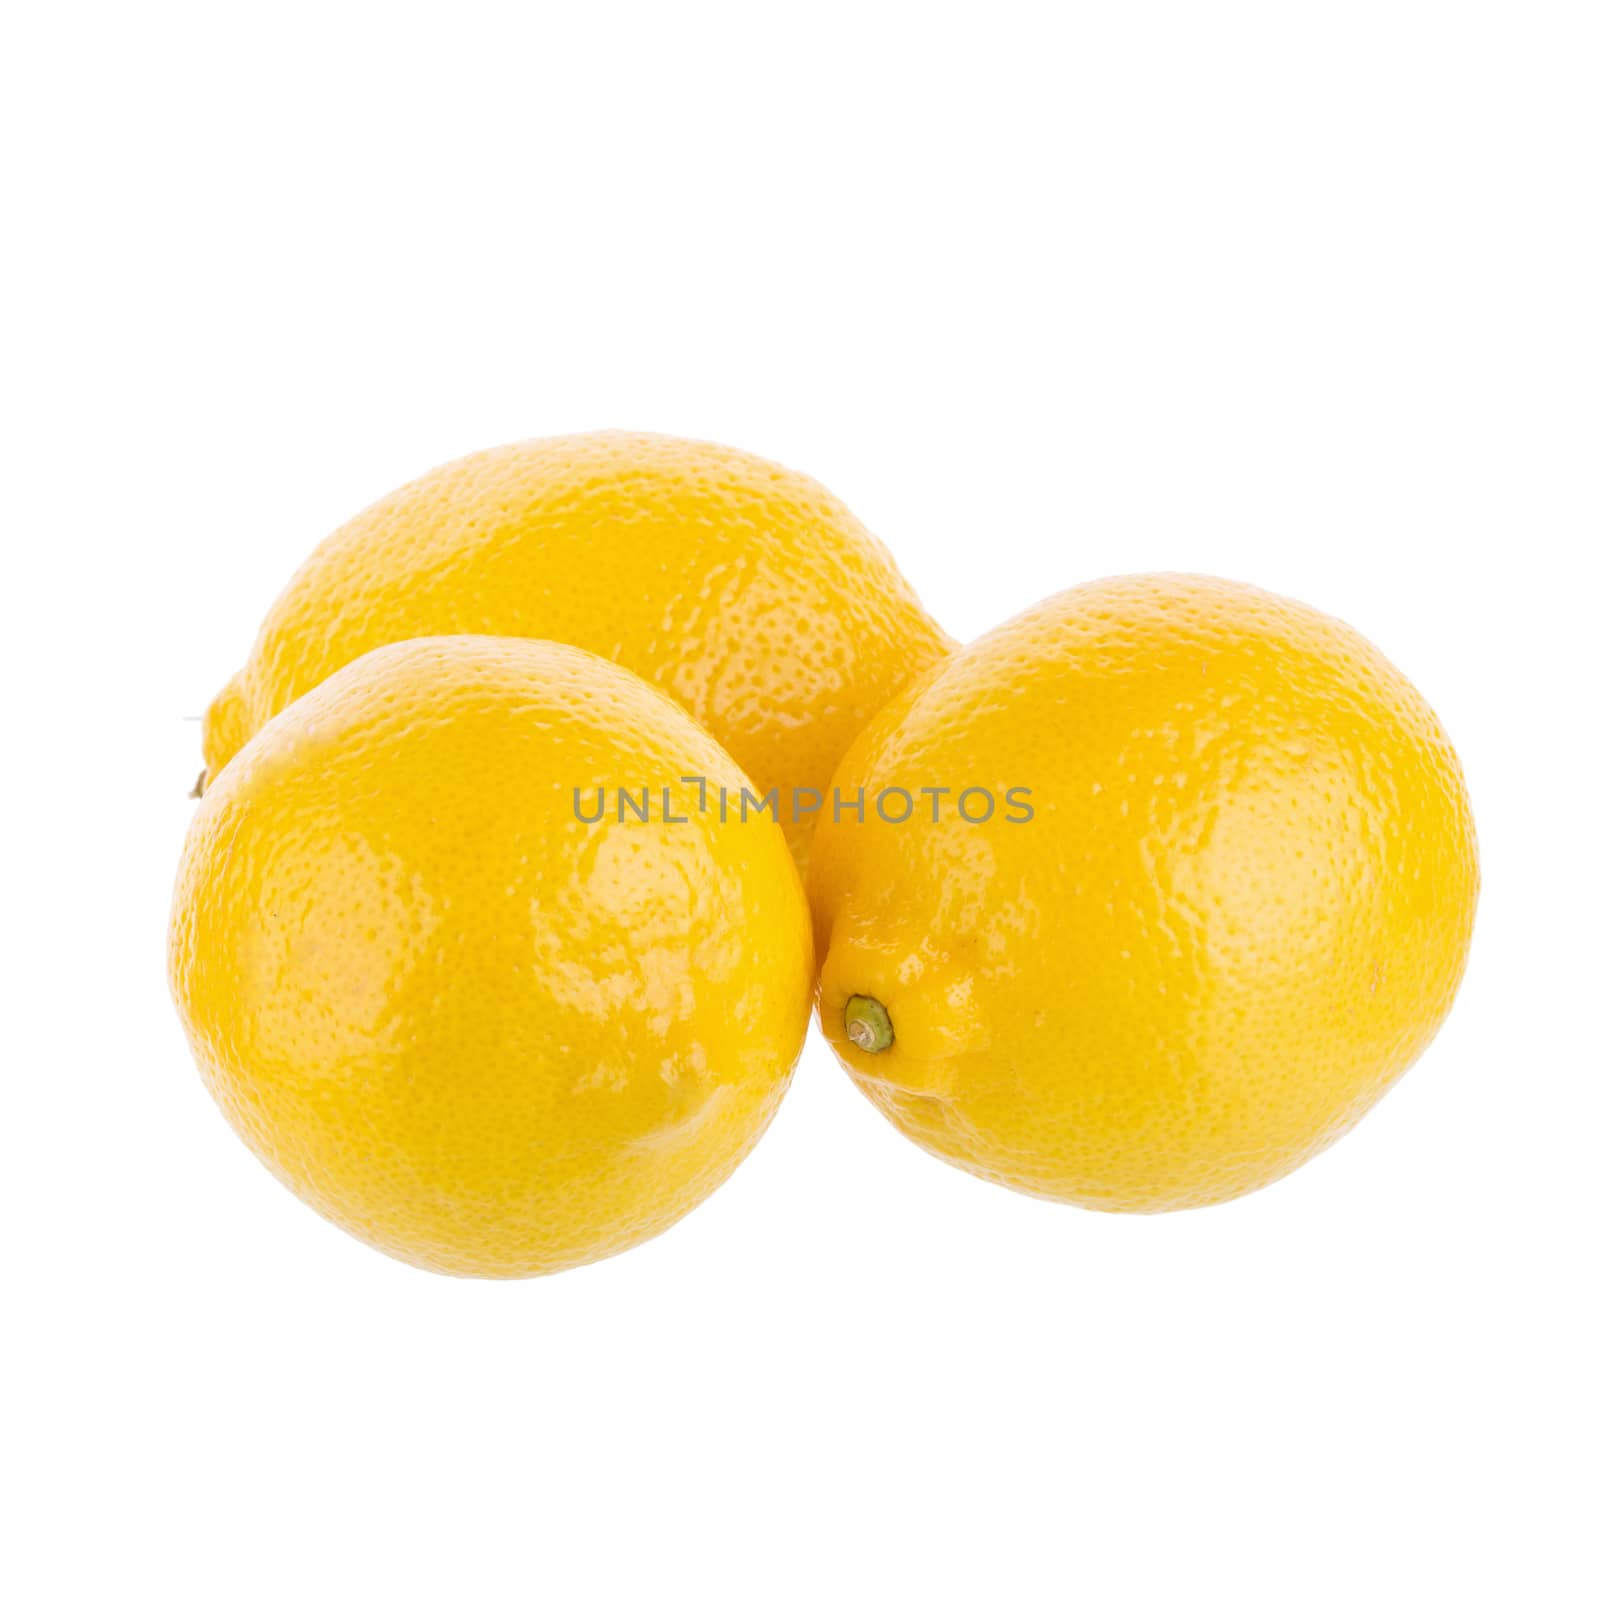 yellow lemon isolated on over white background.